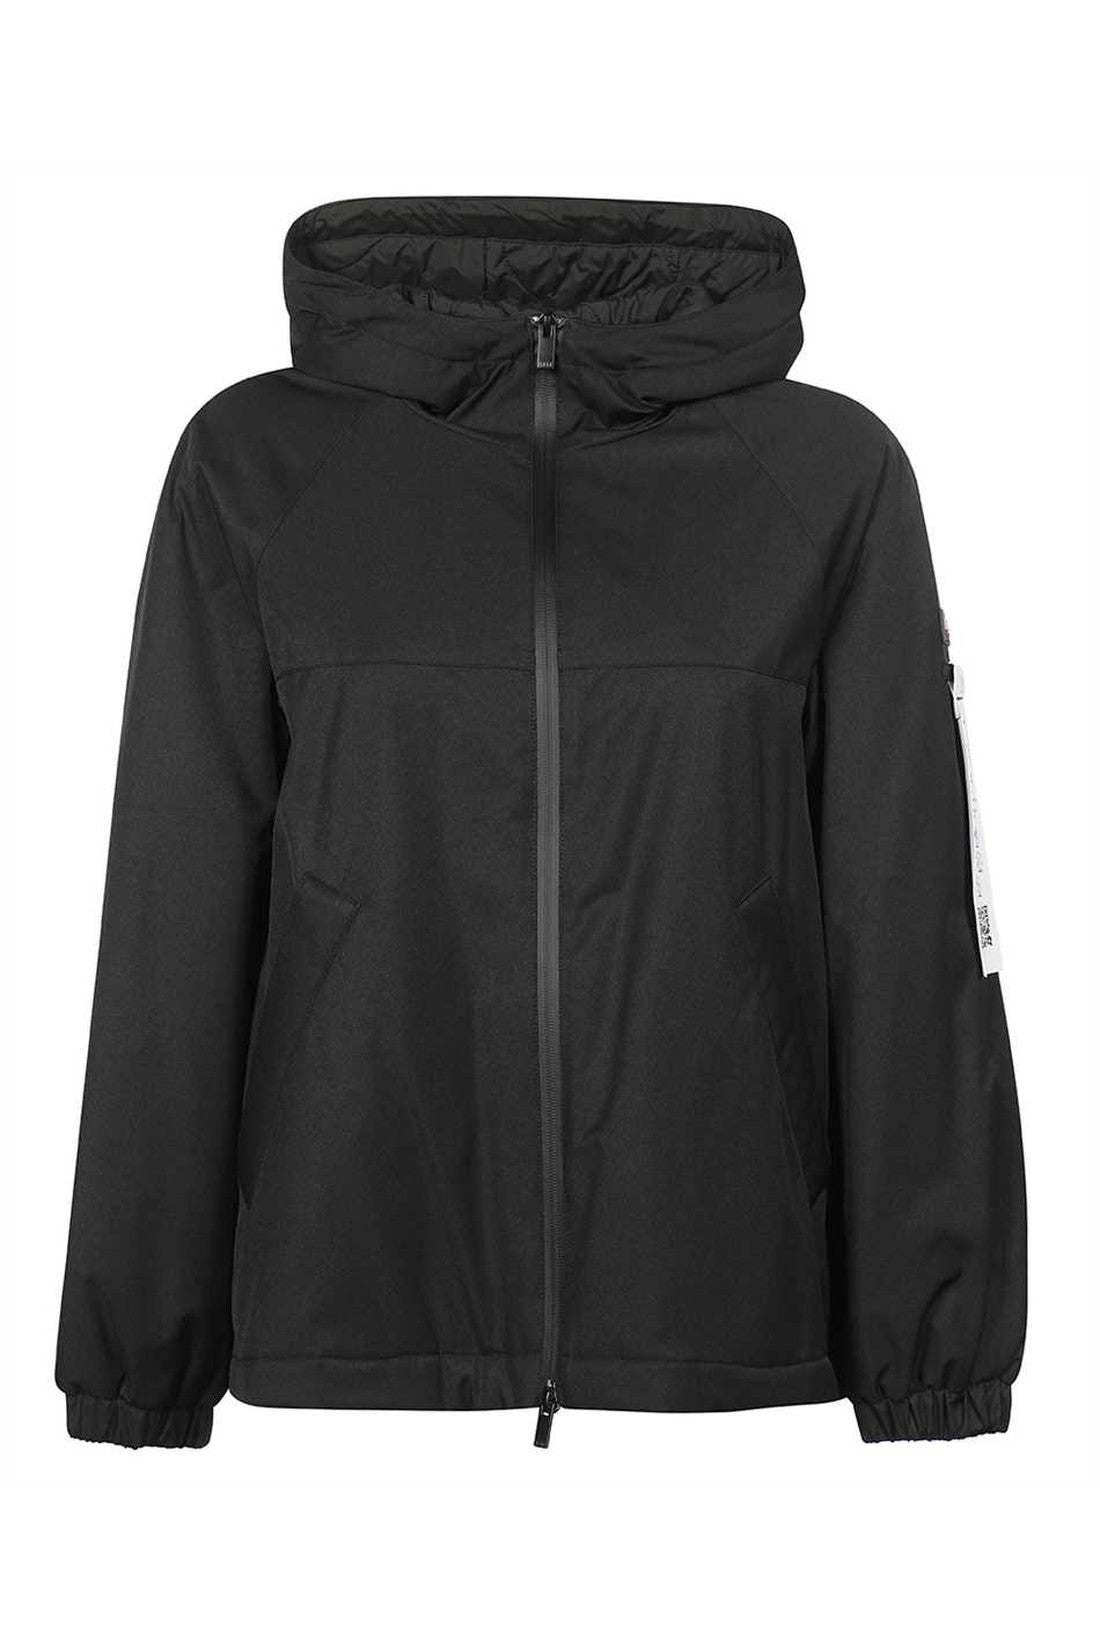 Full zip jacket-Max Mara-OUTLET-SALE-30-ARCHIVIST